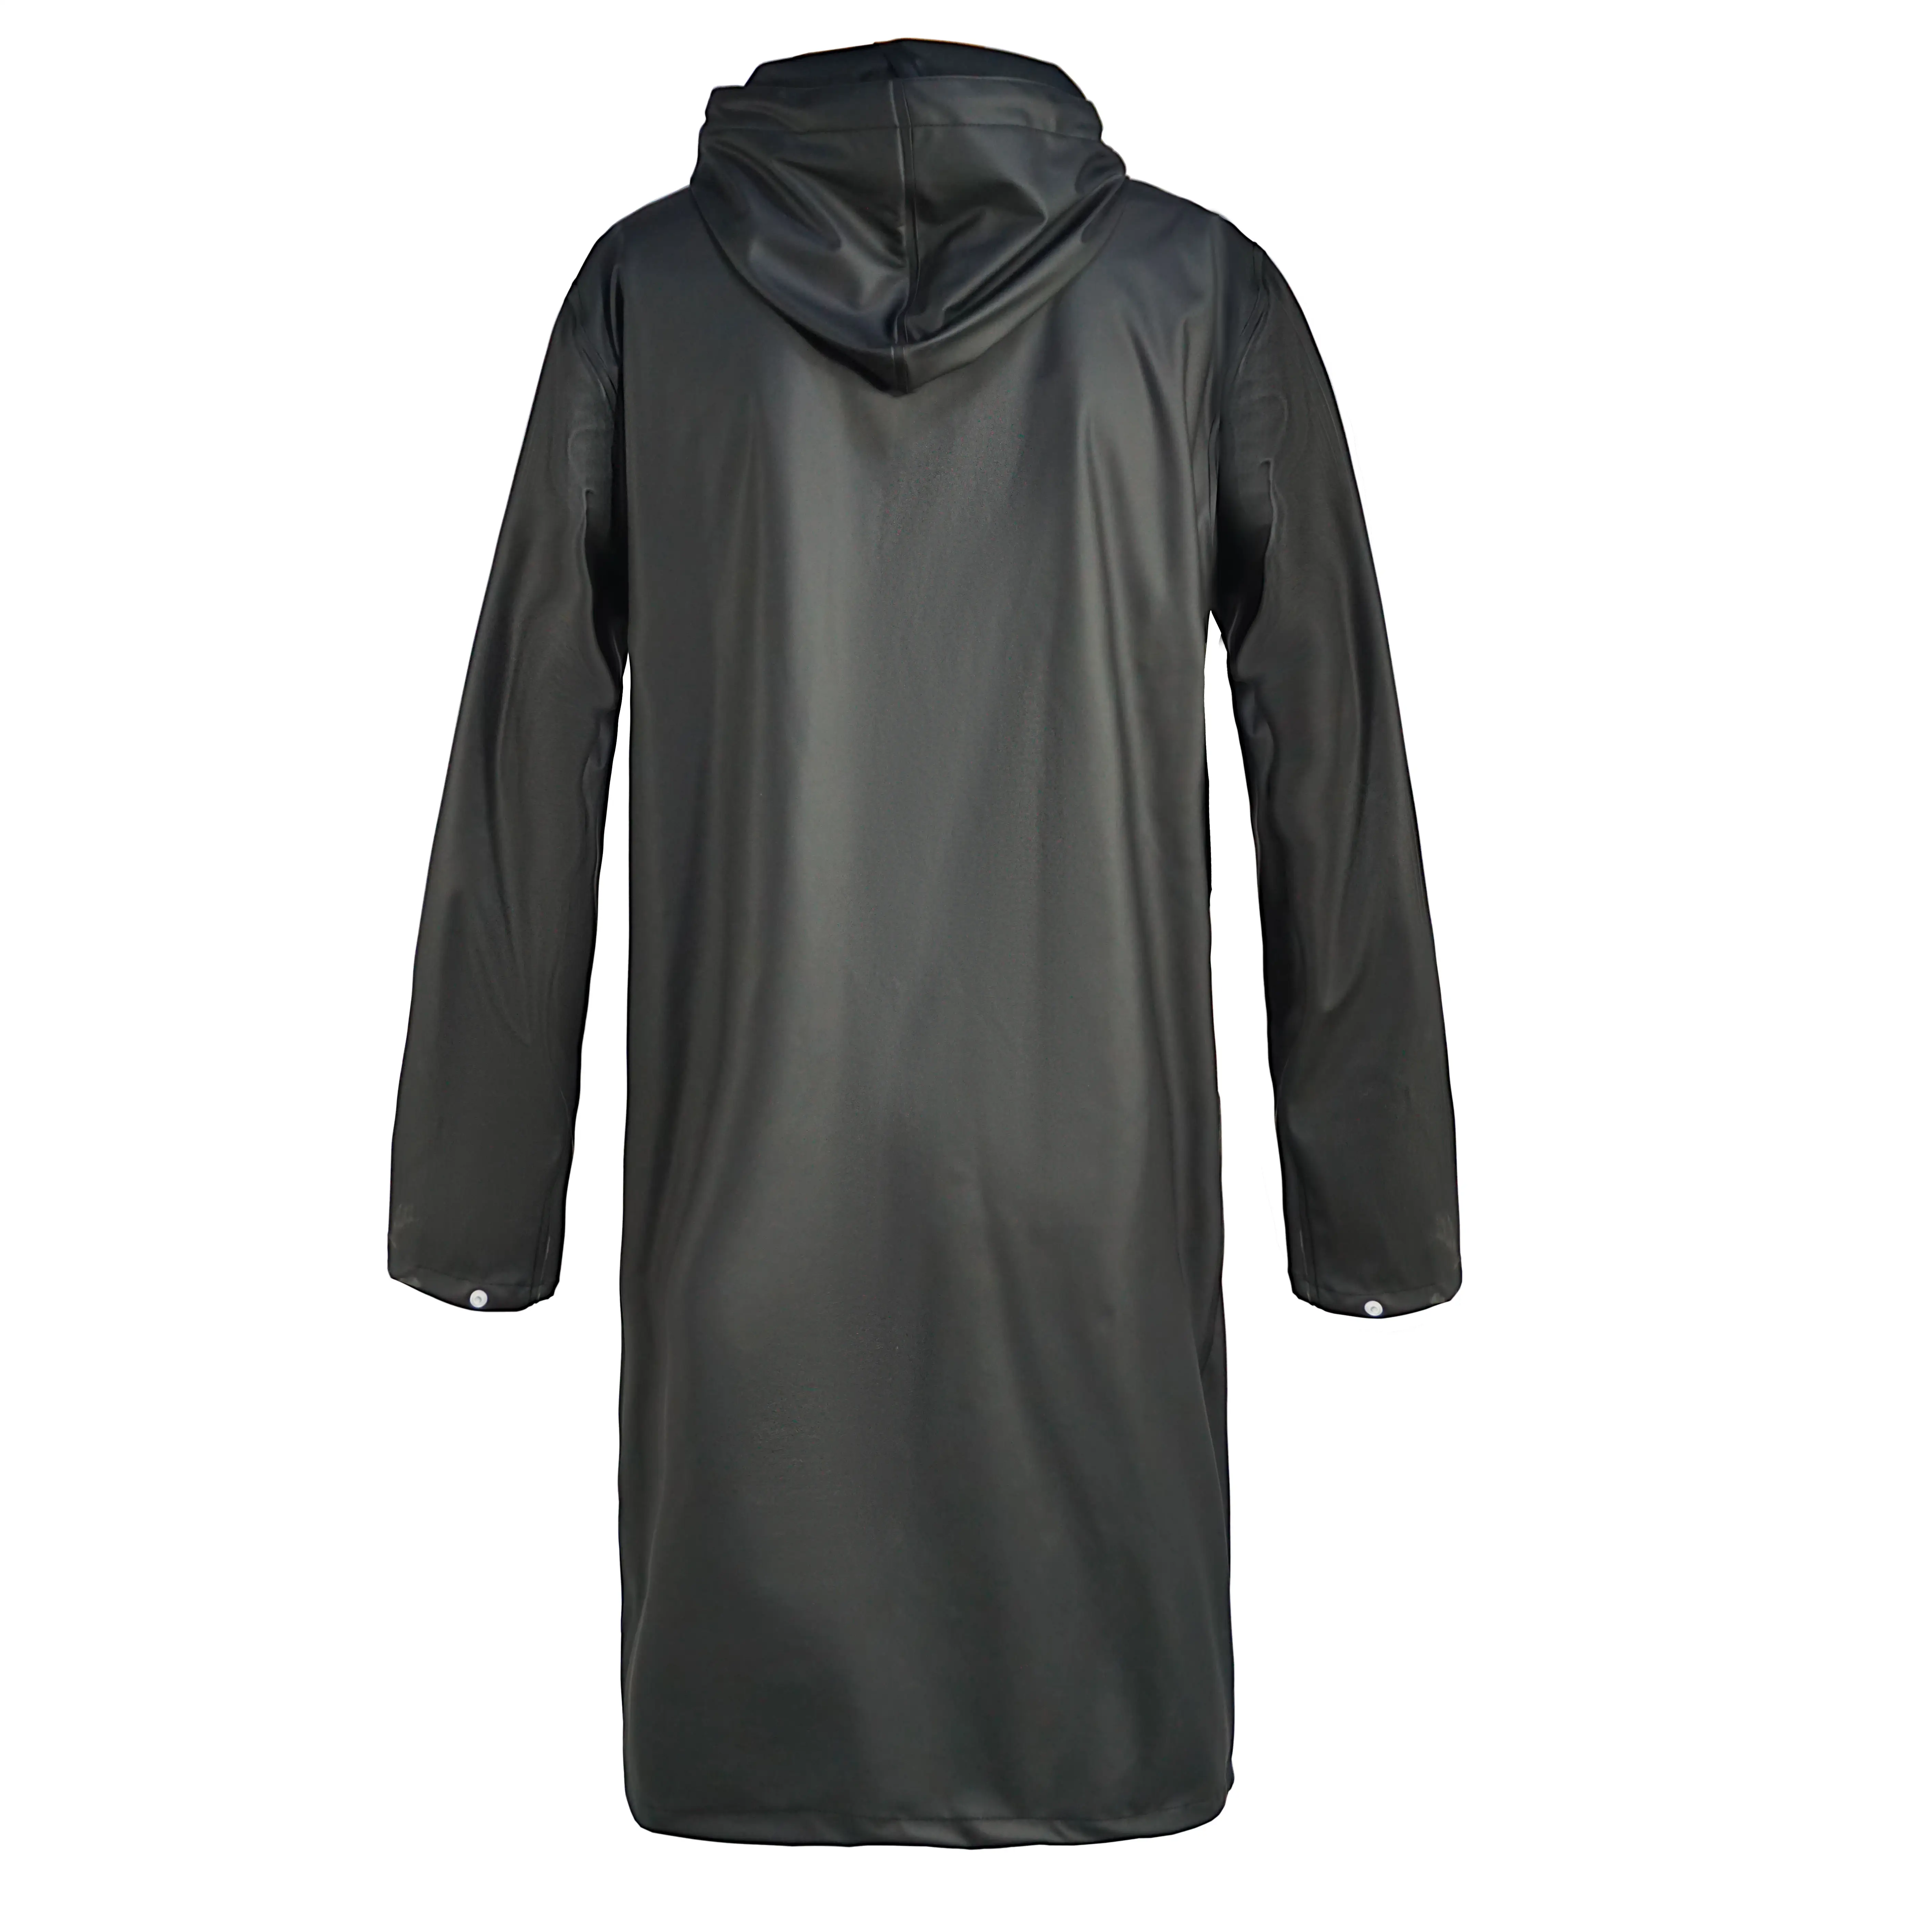 New Fashion PU Warm Rain Jacket Ladies Windproof Breathable Waterproof Jacket For Winter